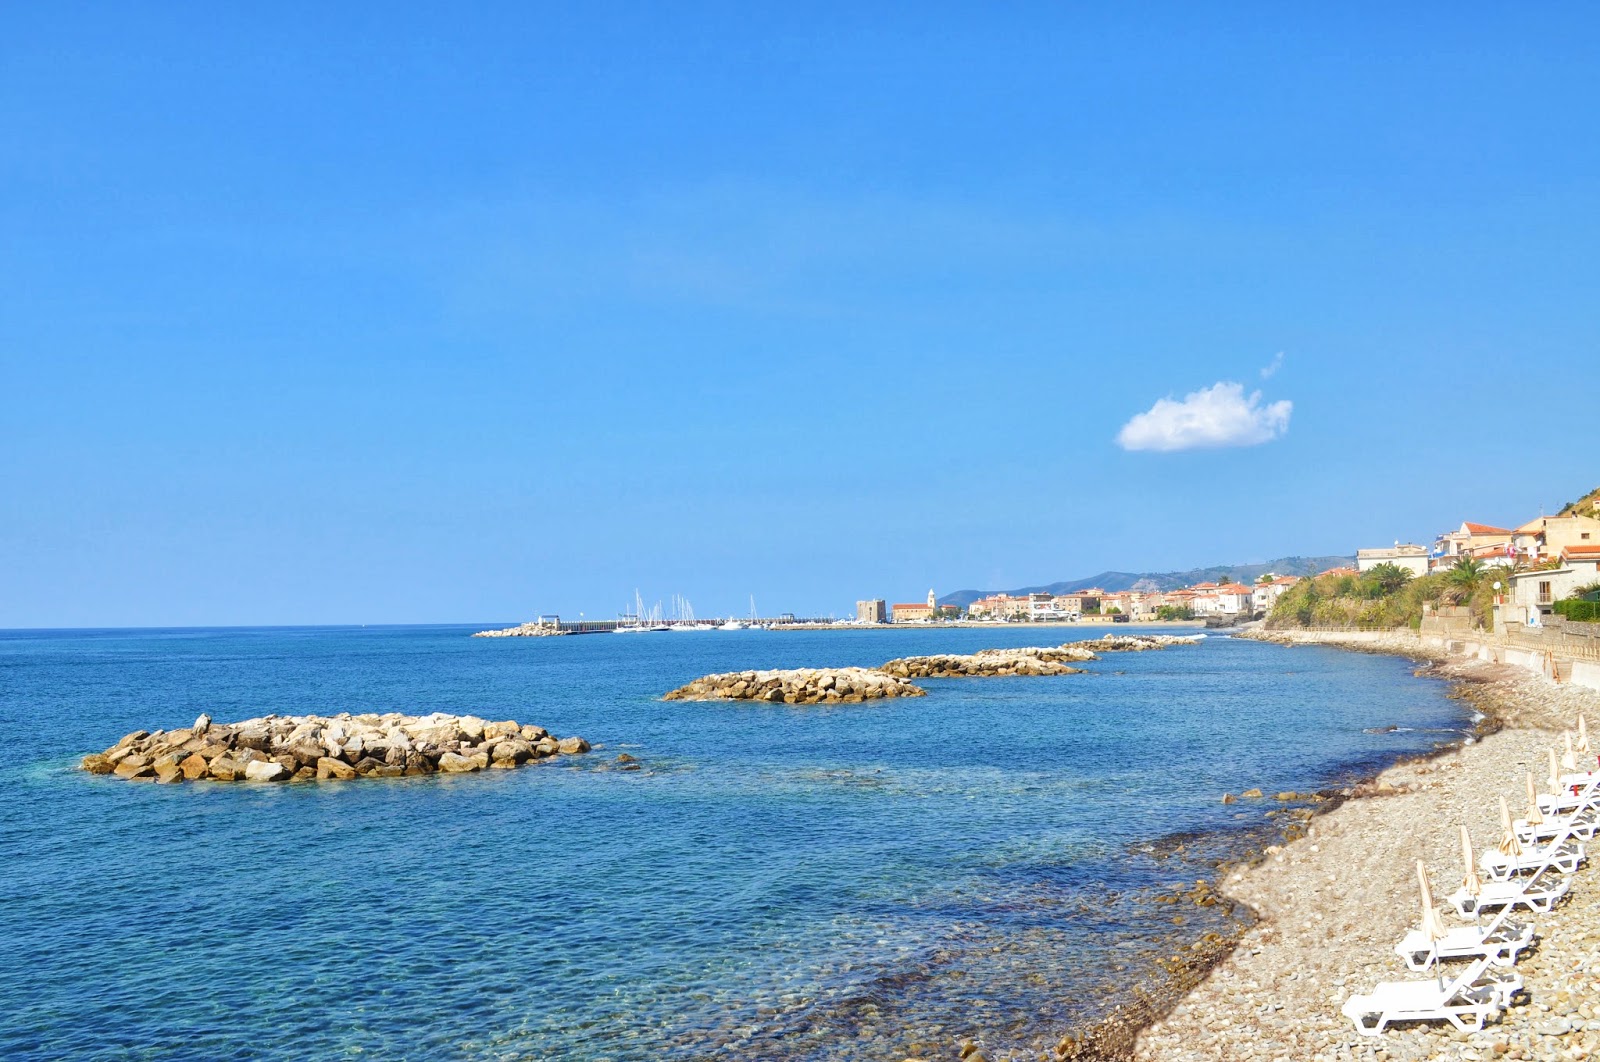 Photo of Acciaroli beach with brown pebble surface